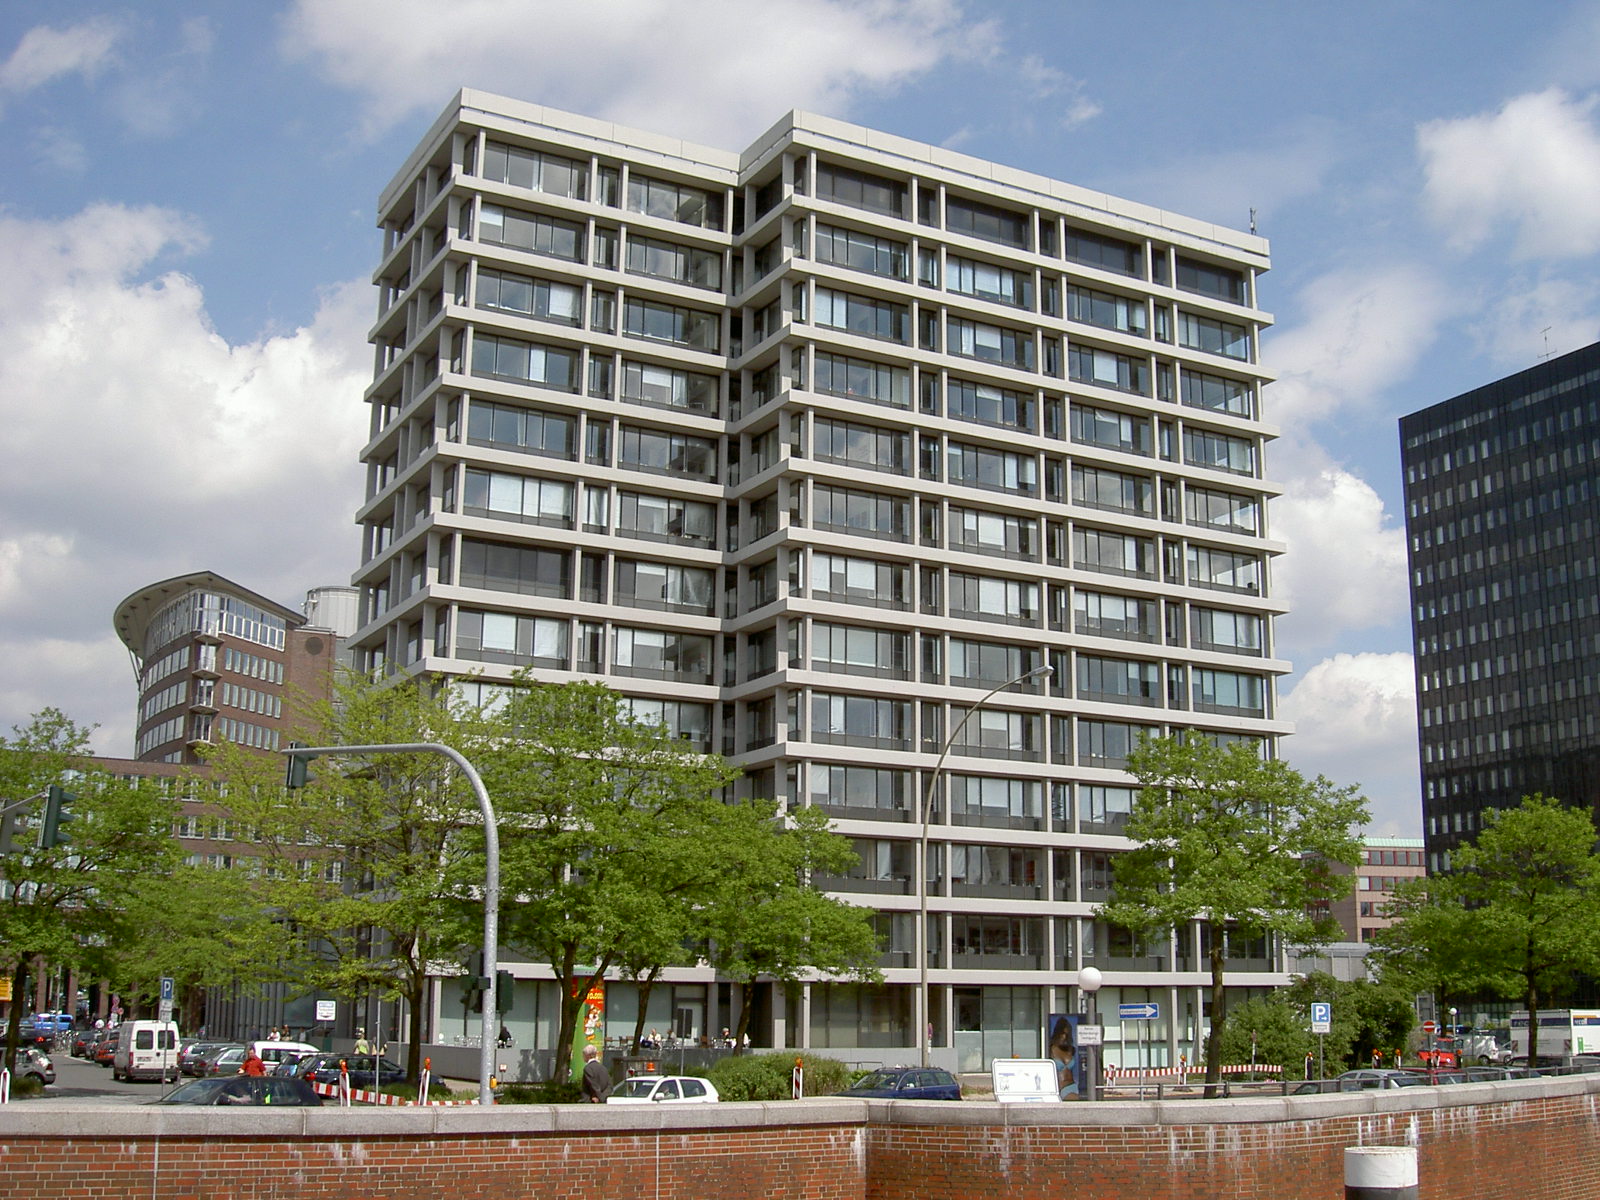 File:Spiegel Building Hamburg 4.jpg - Wikimedia Commons